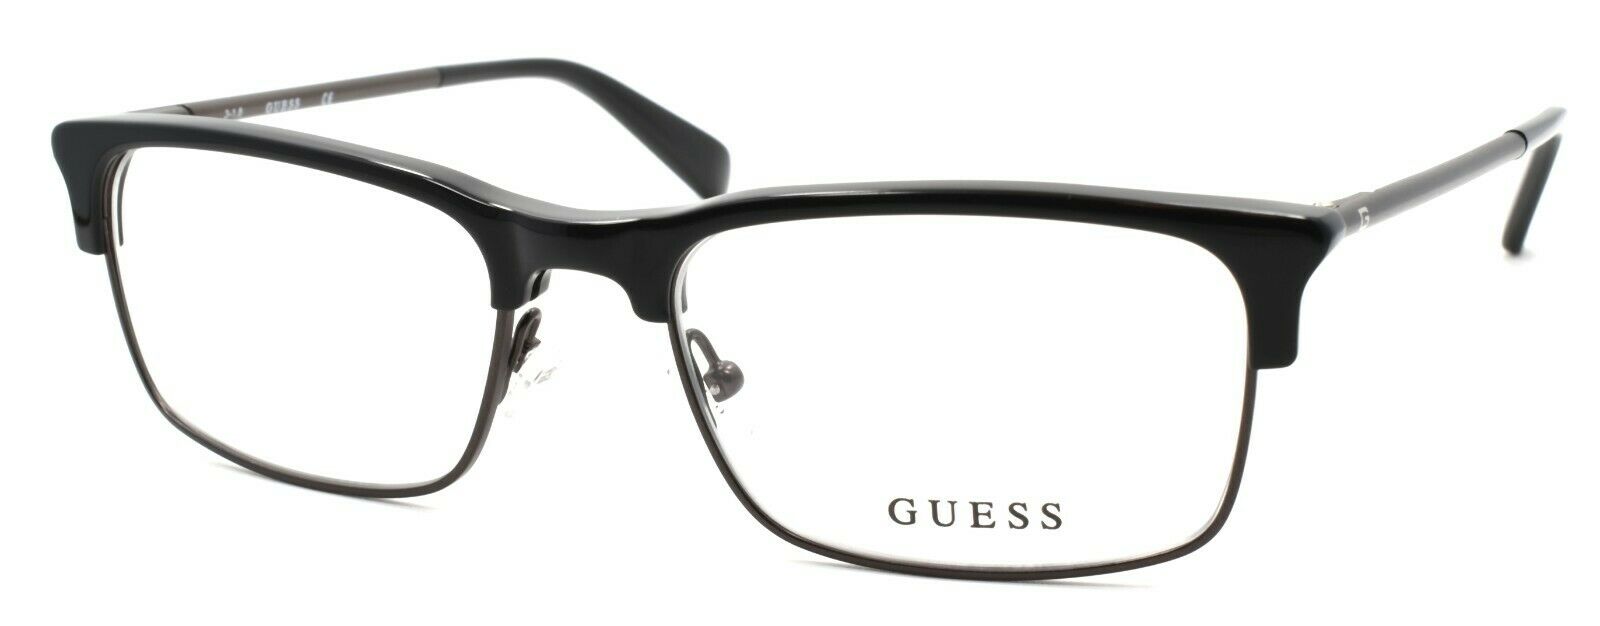 1-GUESS GU1886 001 Men's Eyeglasses Frames 53-18-140 Black + CASE-664689735198-IKSpecs